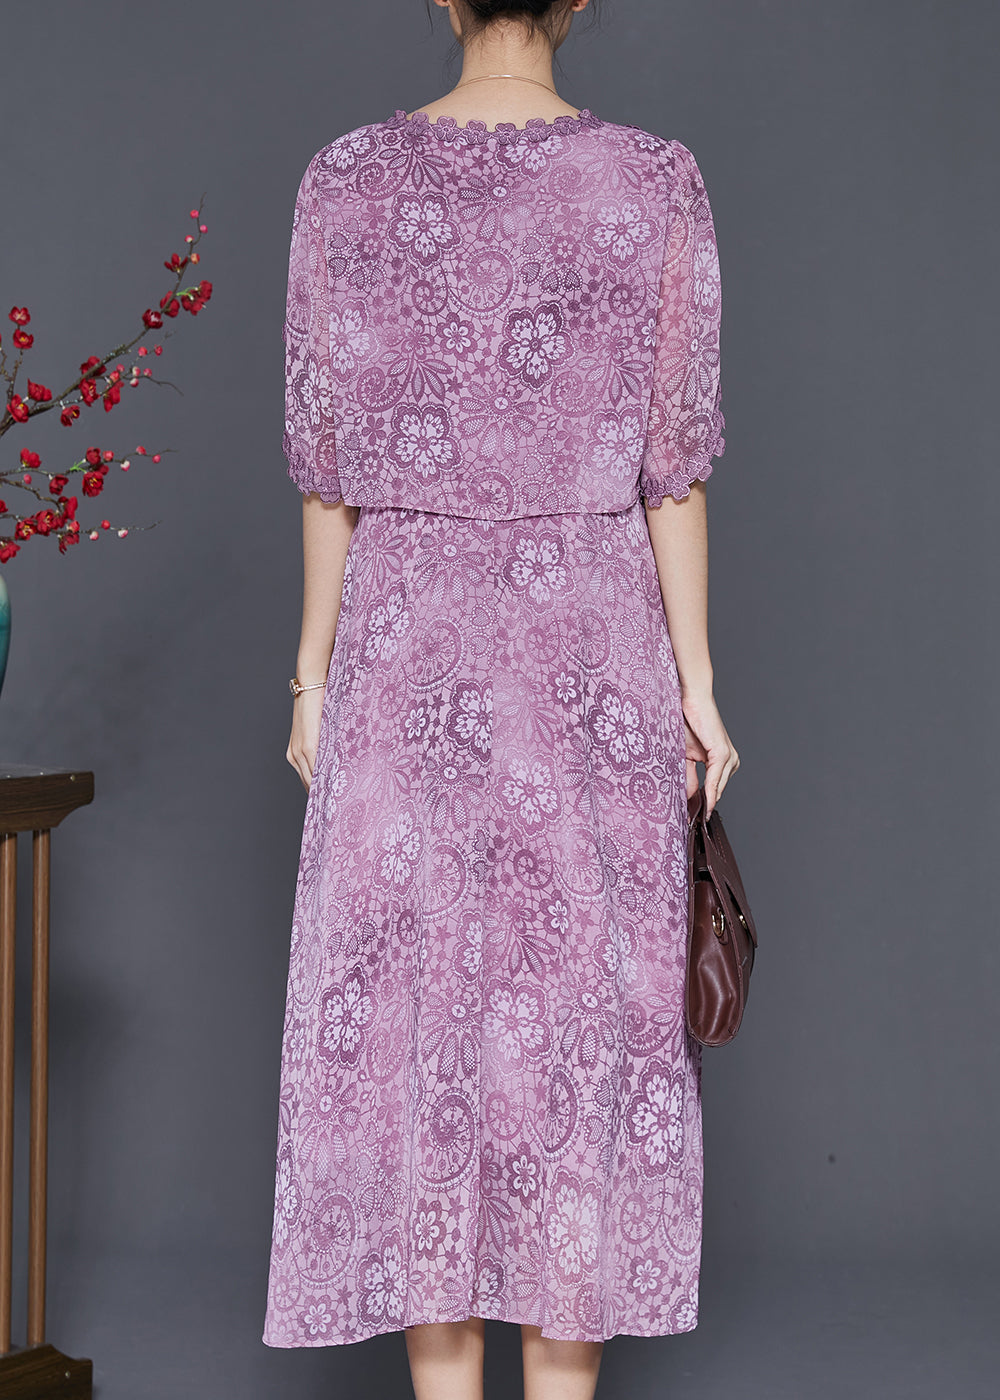 Silm Fit Purple Print Chiffon Fake Two Piece Dresses Summer